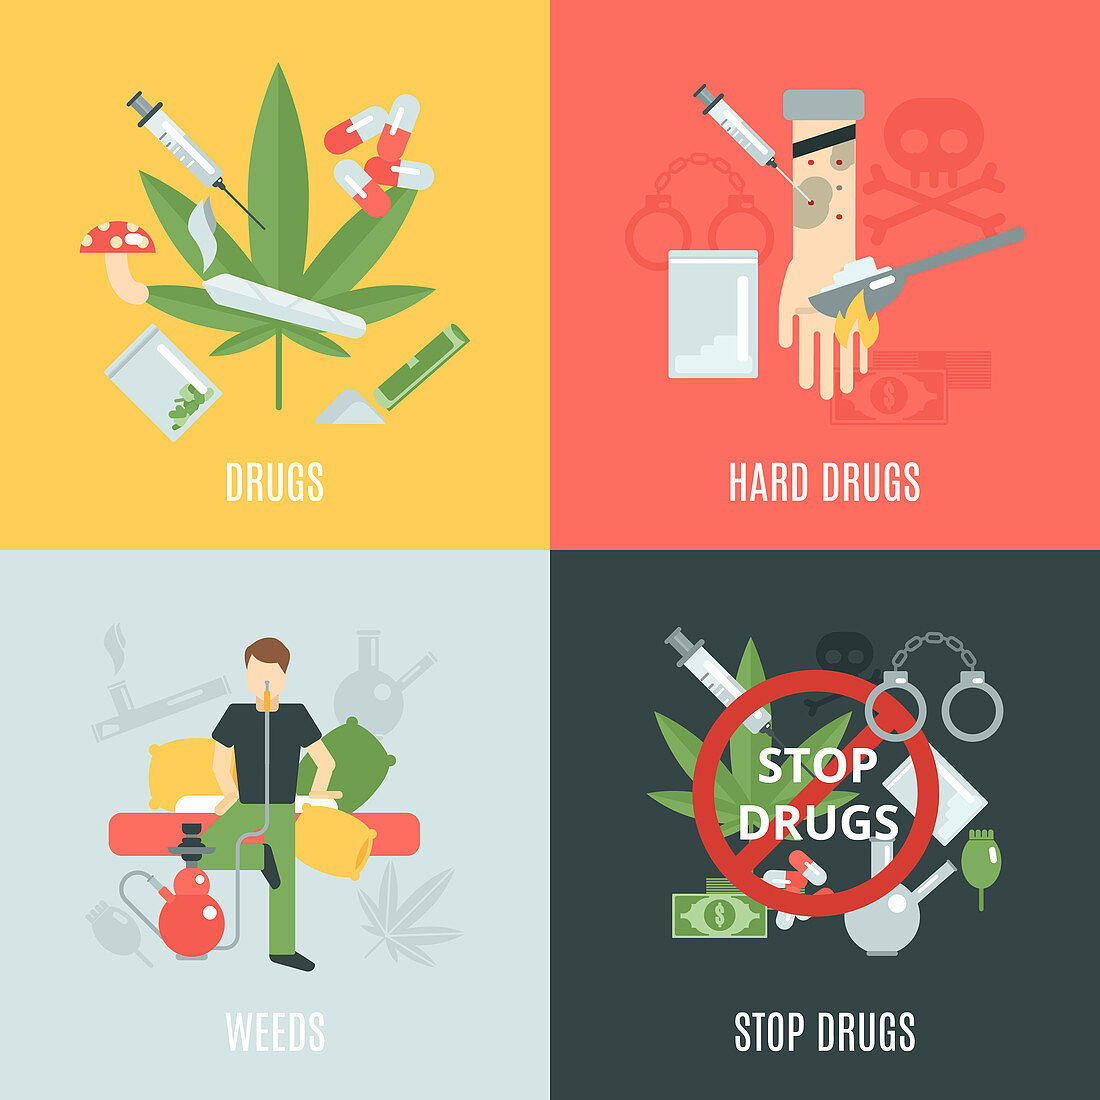 Illegal drugs, illustration